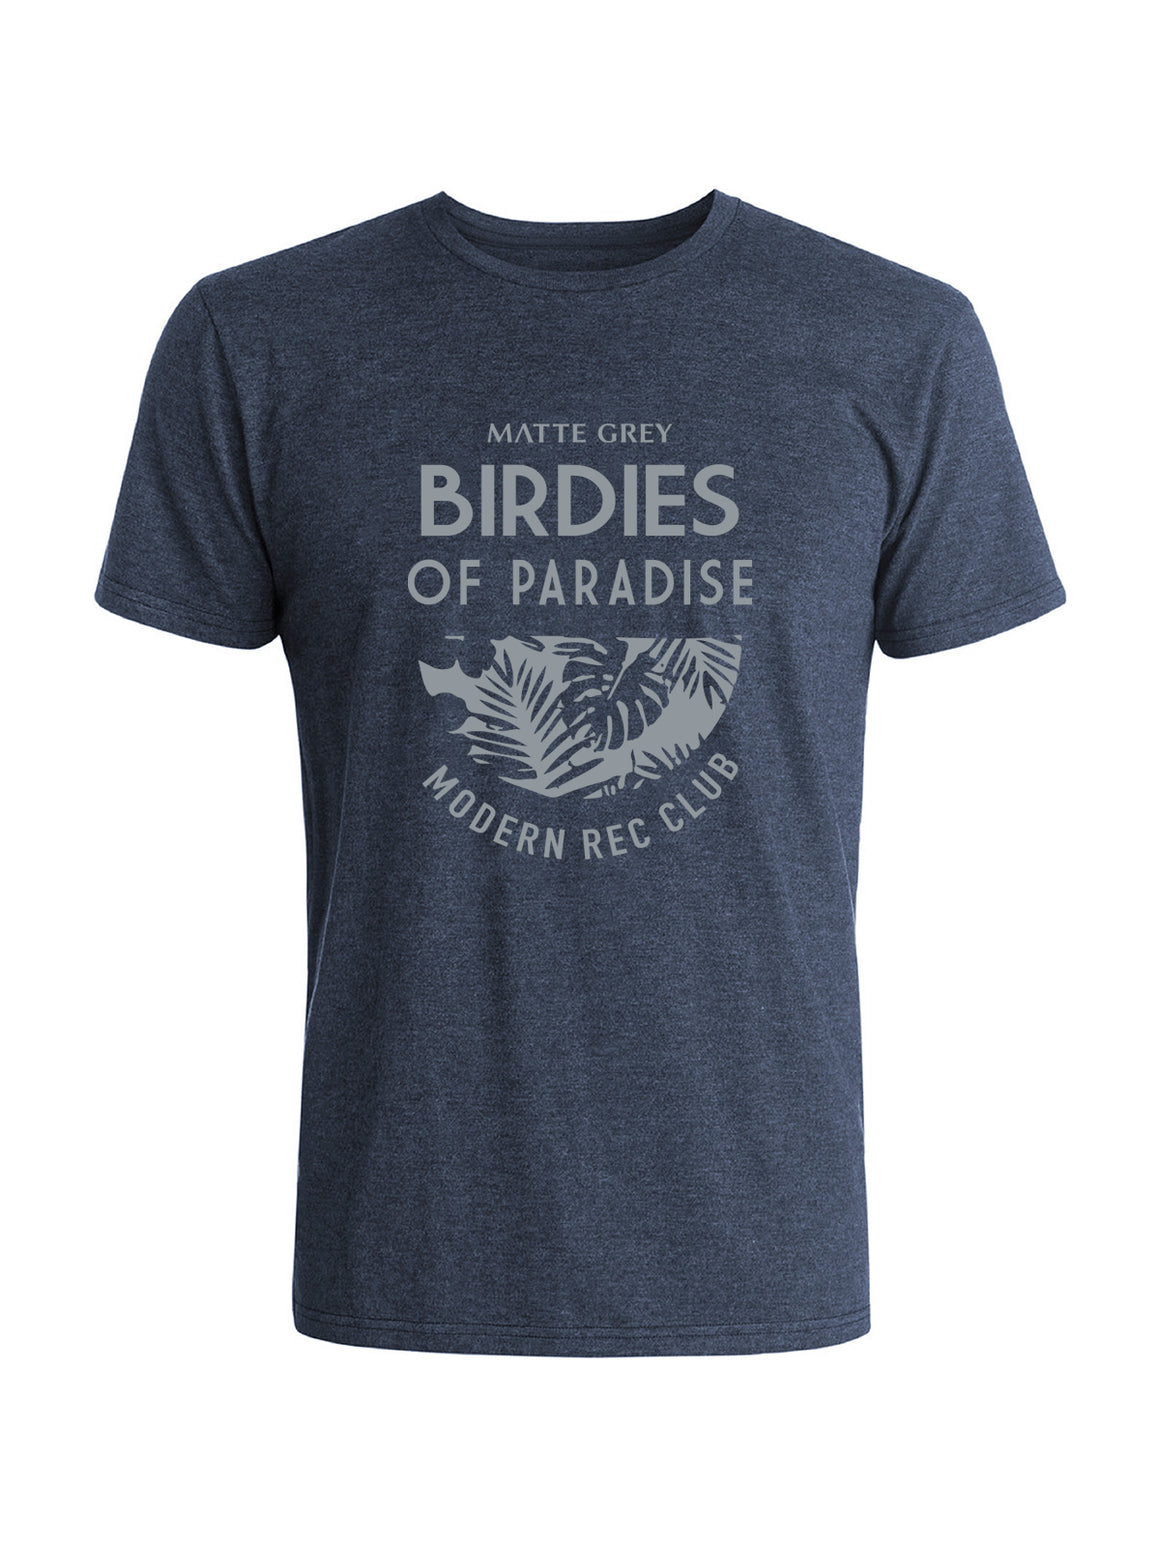 Birdies of Paradise Tee - Navy Heather (Salt)